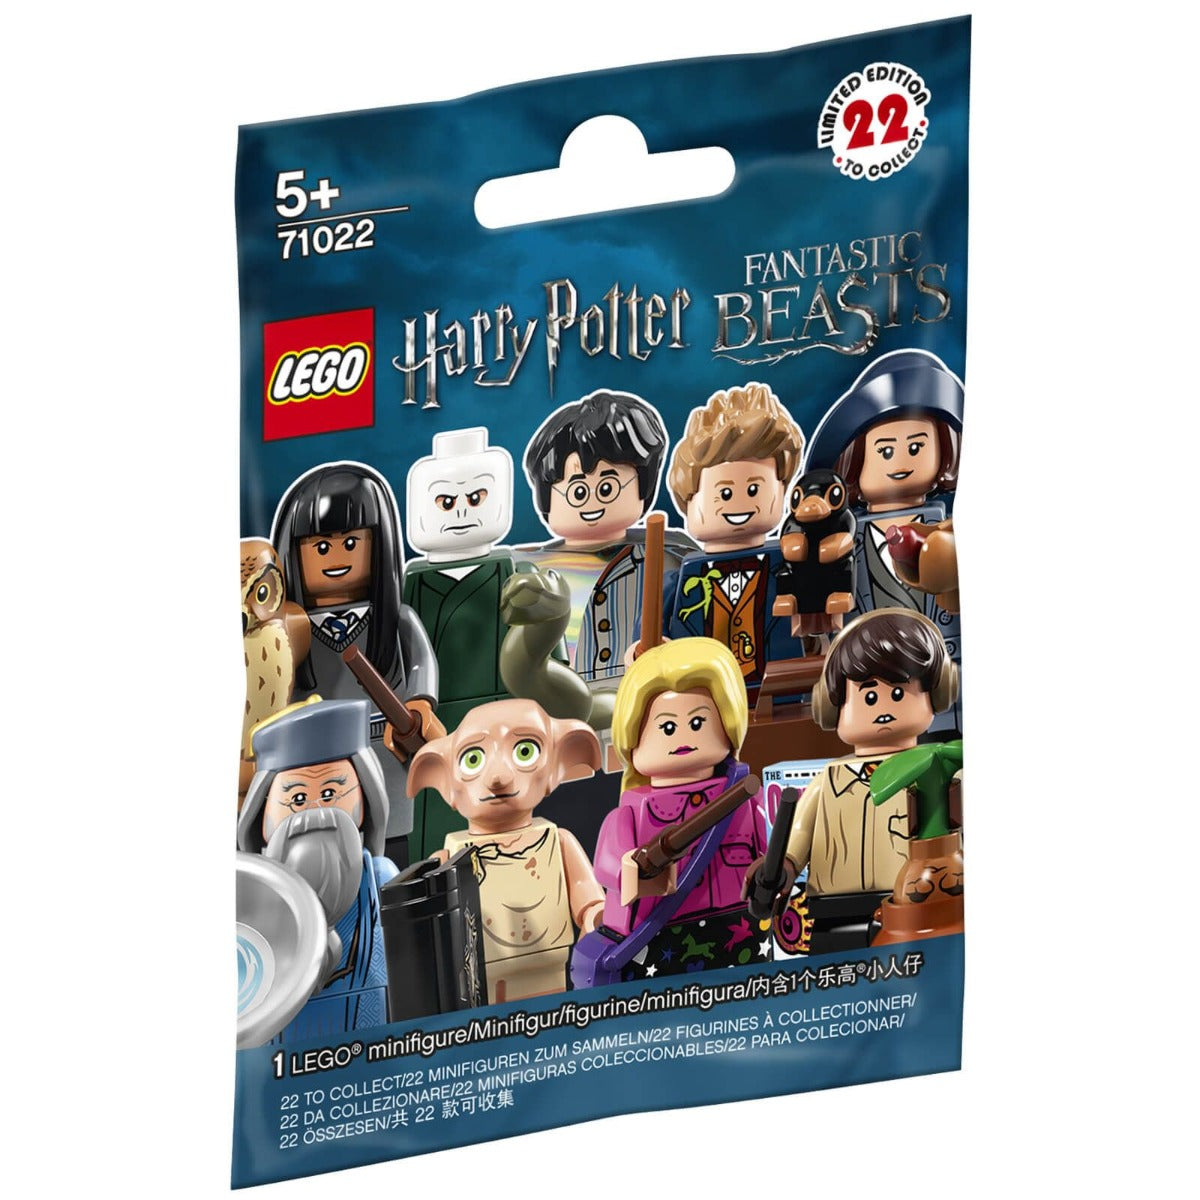 Lego Harry Potter & Fantastic Beasts Minifigures 71022